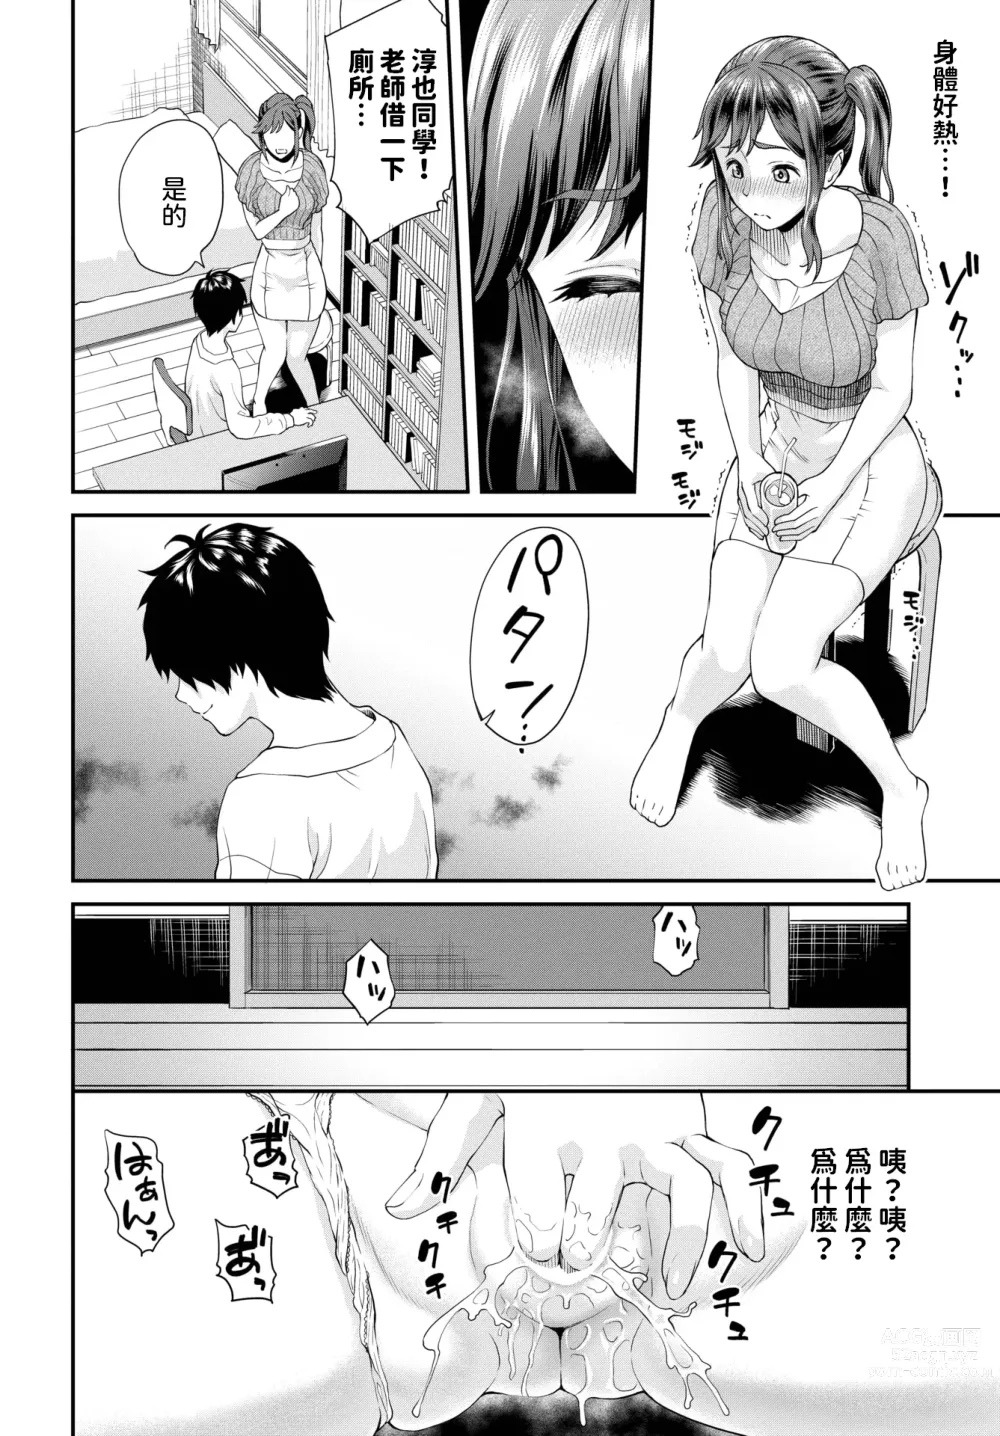 Page 4 of manga Kamimura-sensei ga Ochiru made